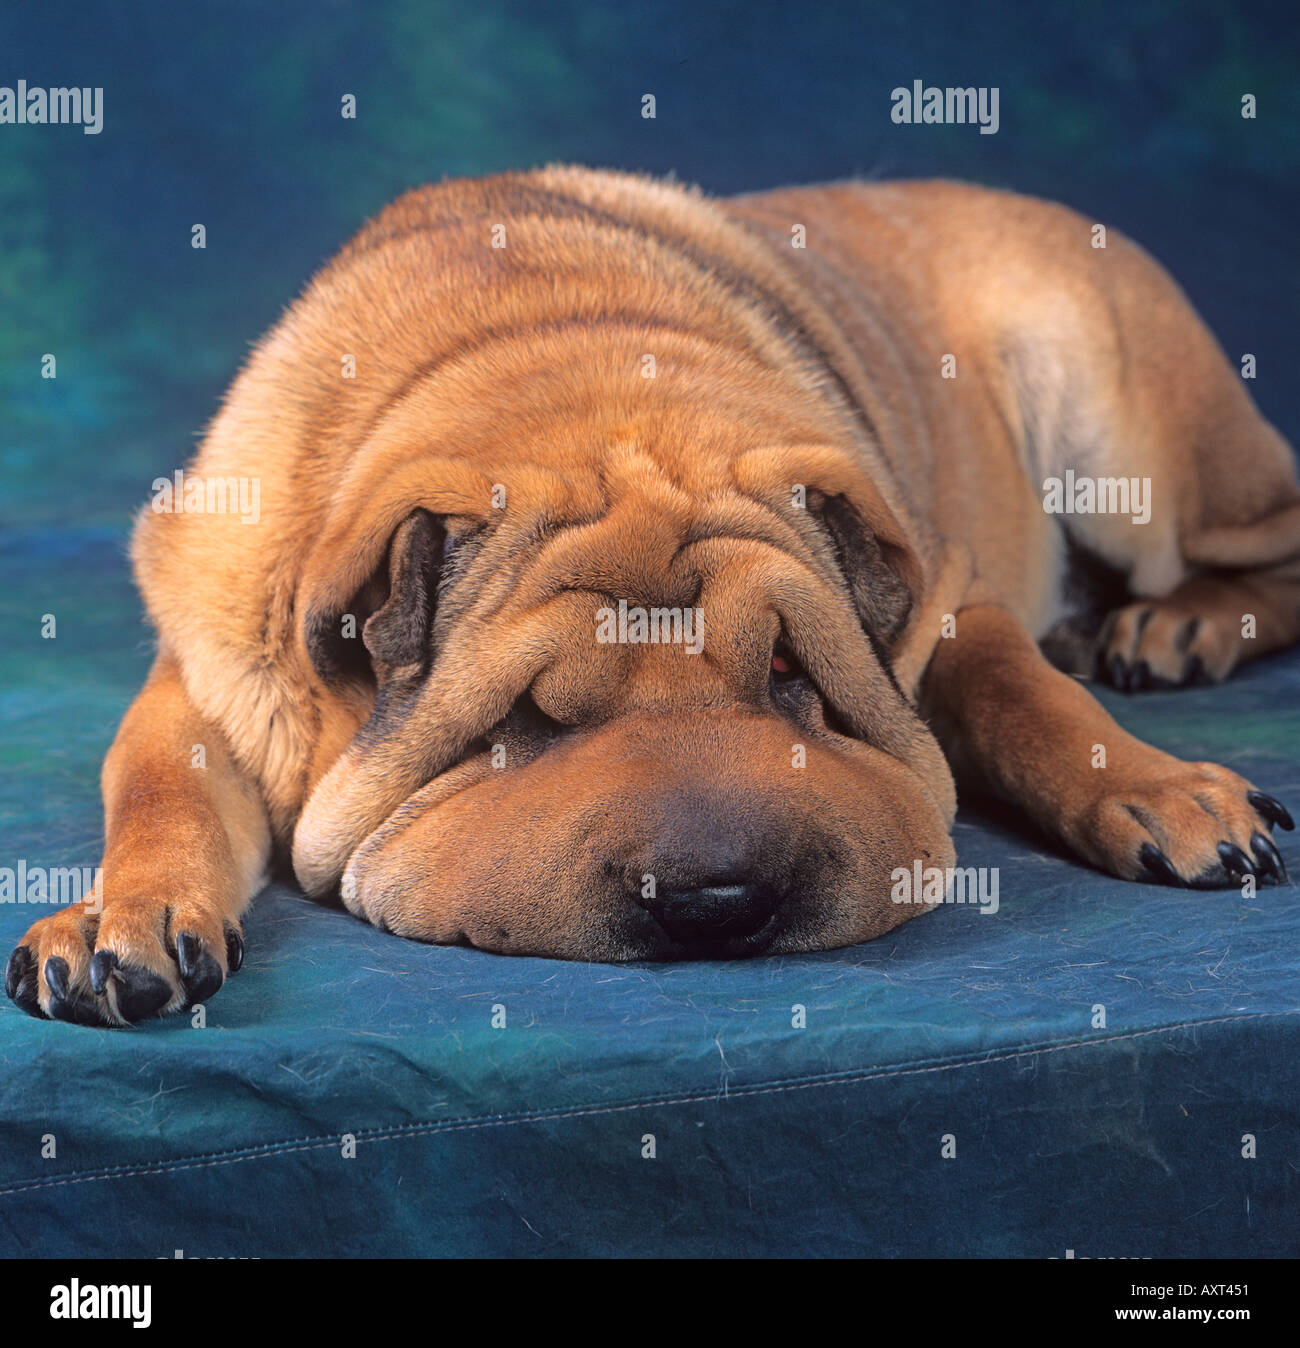 The Shar Pei dog portrait Stock Photo